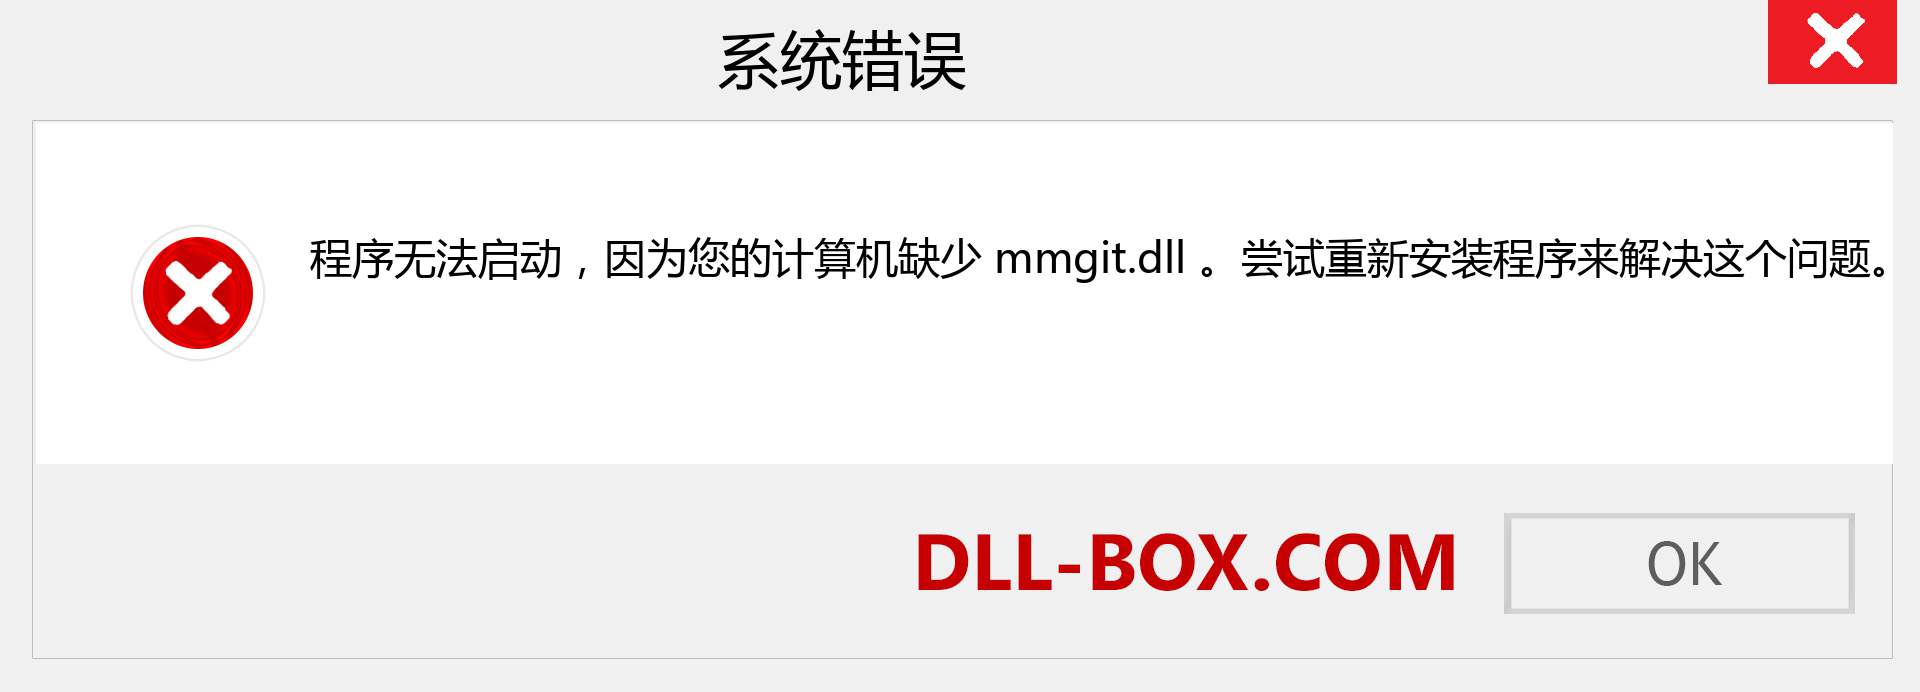 mmgit.dll 文件丢失？。 适用于 Windows 7、8、10 的下载 - 修复 Windows、照片、图像上的 mmgit dll 丢失错误